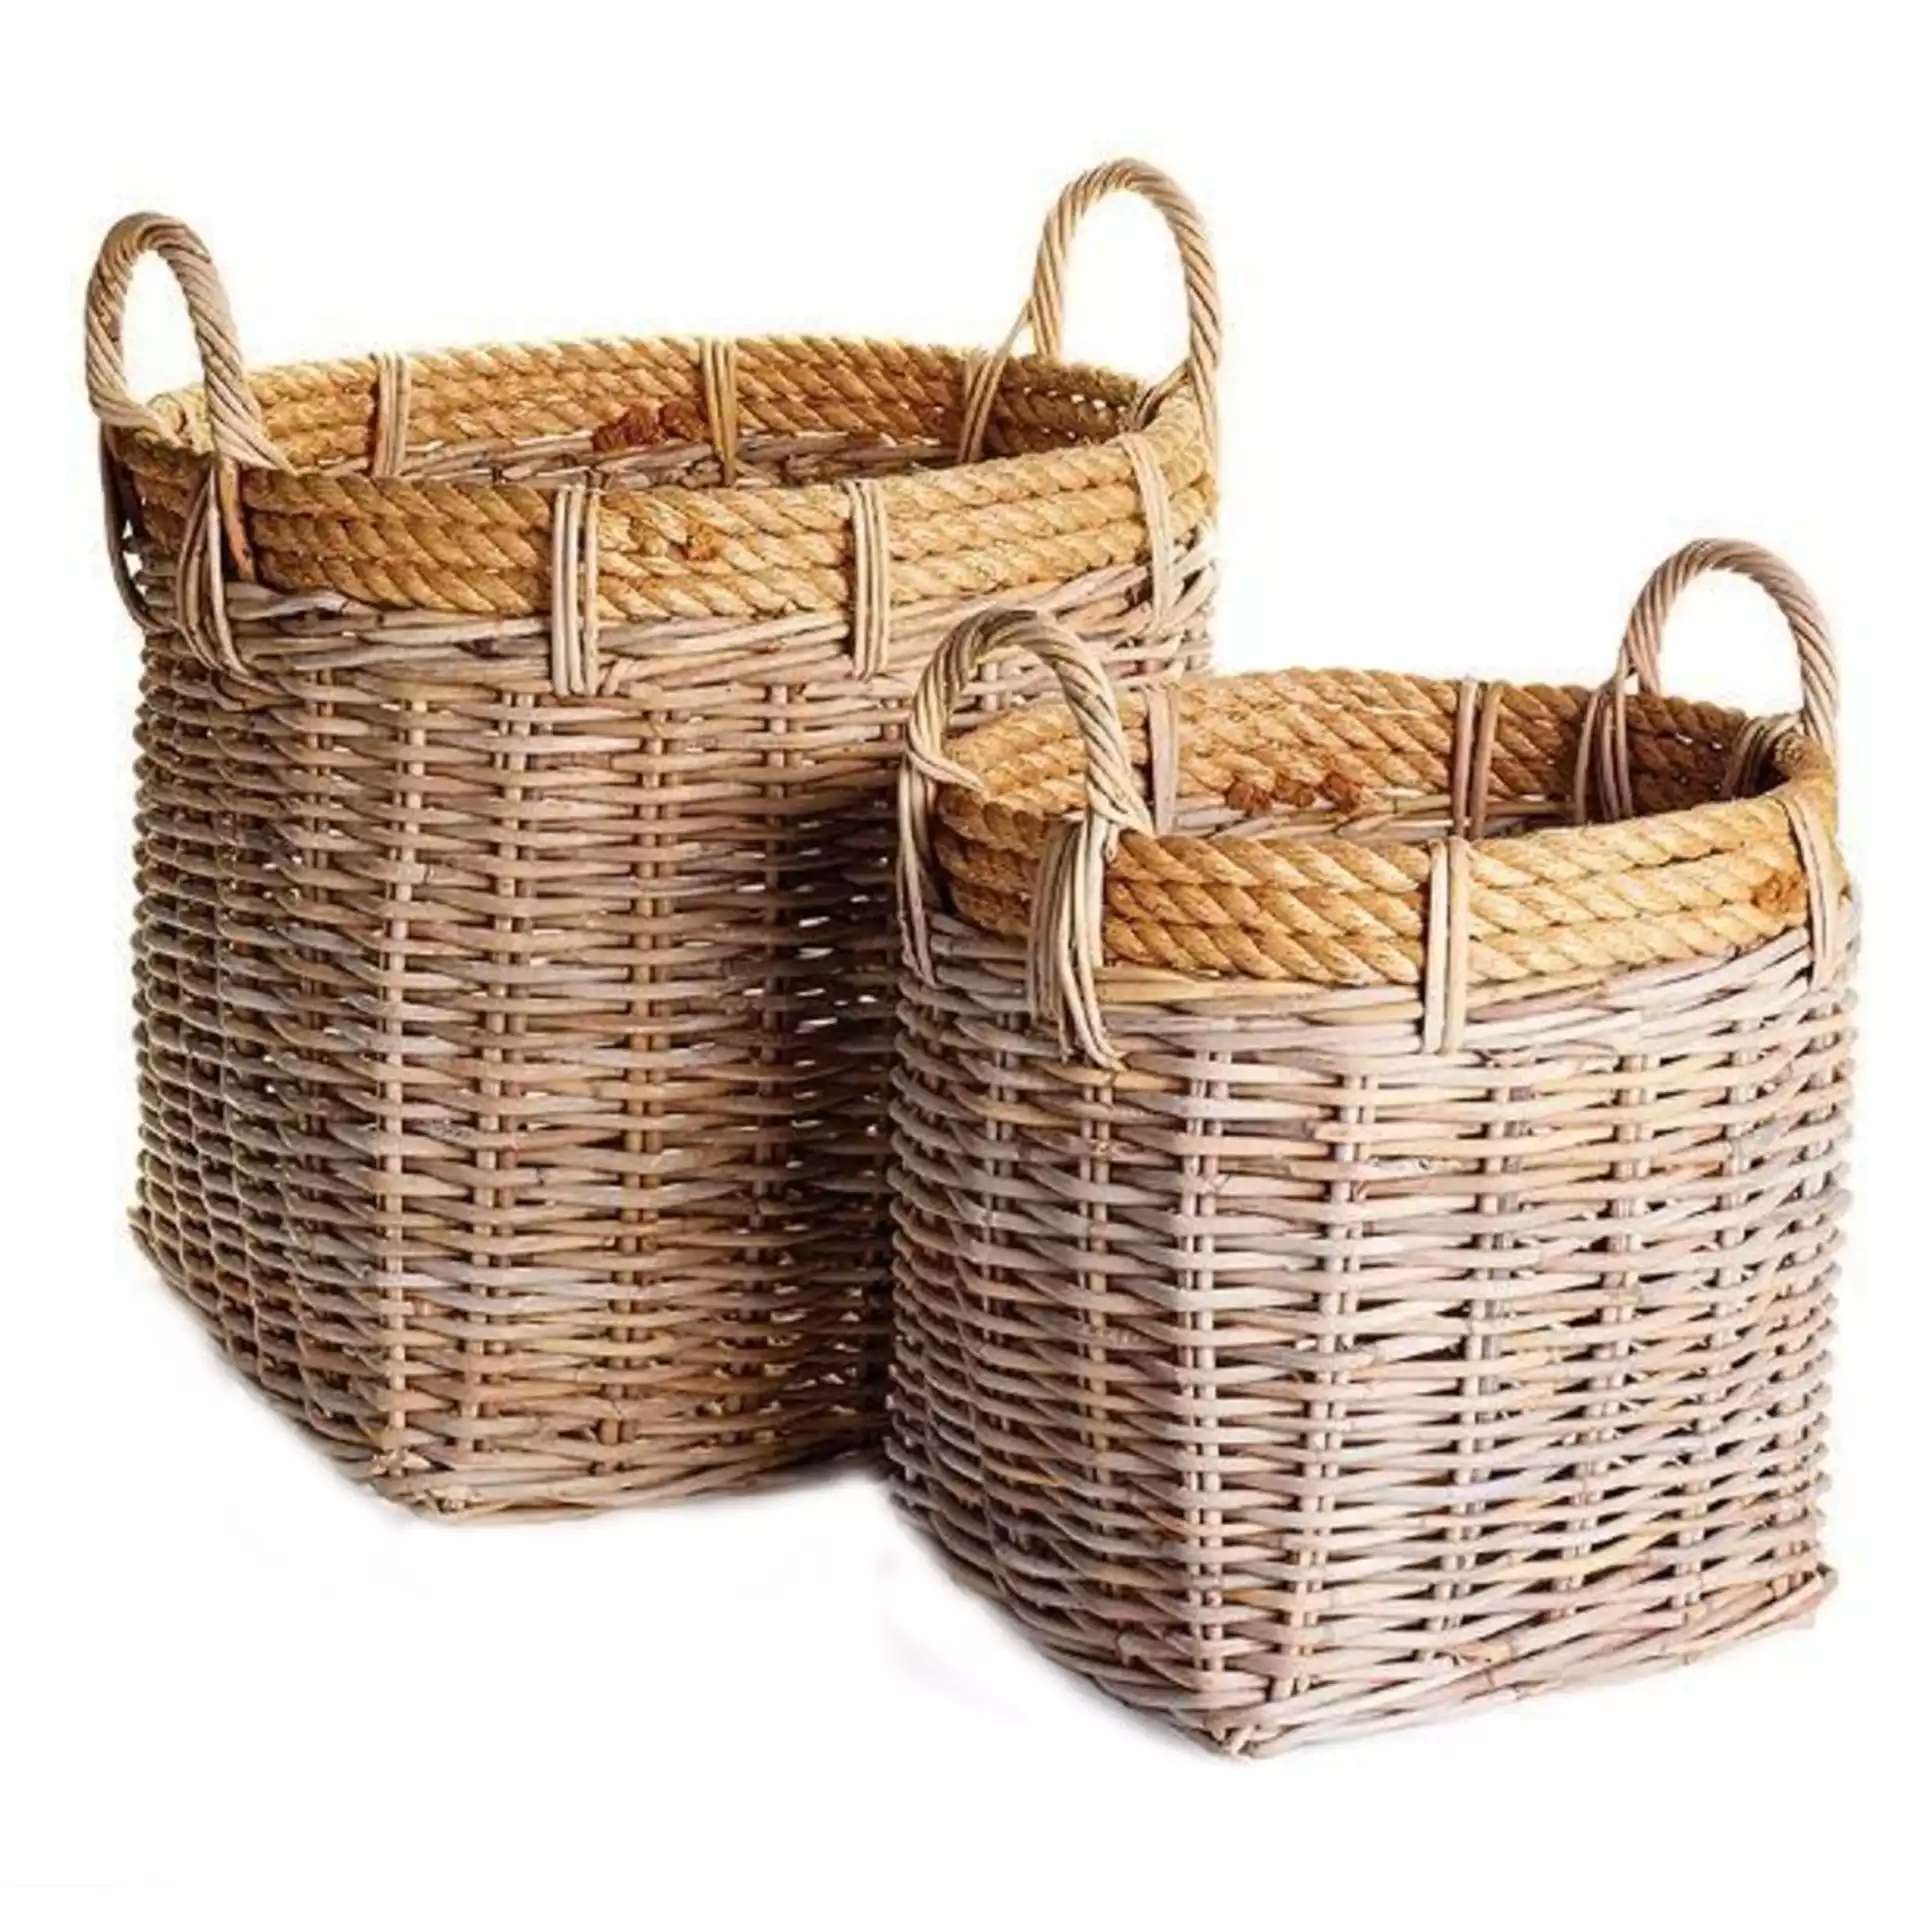 Arthur Coastal Beach Brown Woven Rattan Harvest Baskets - Set of 2